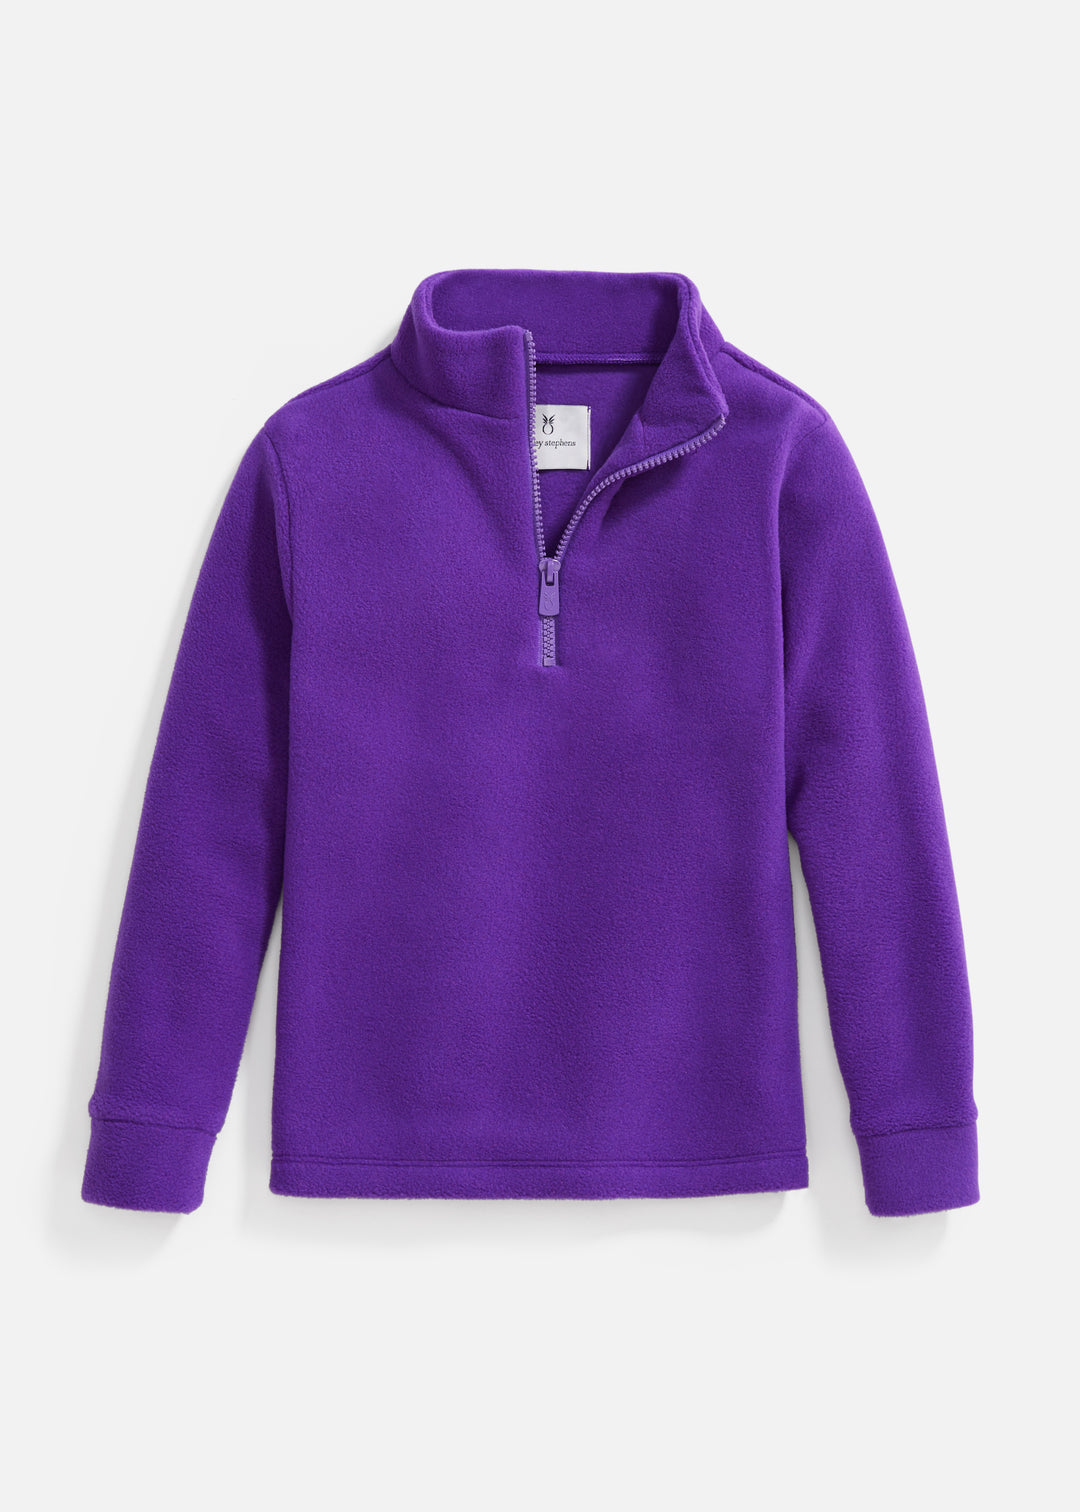 Kids Windabout Pullover in Vello Fleece (Purple)